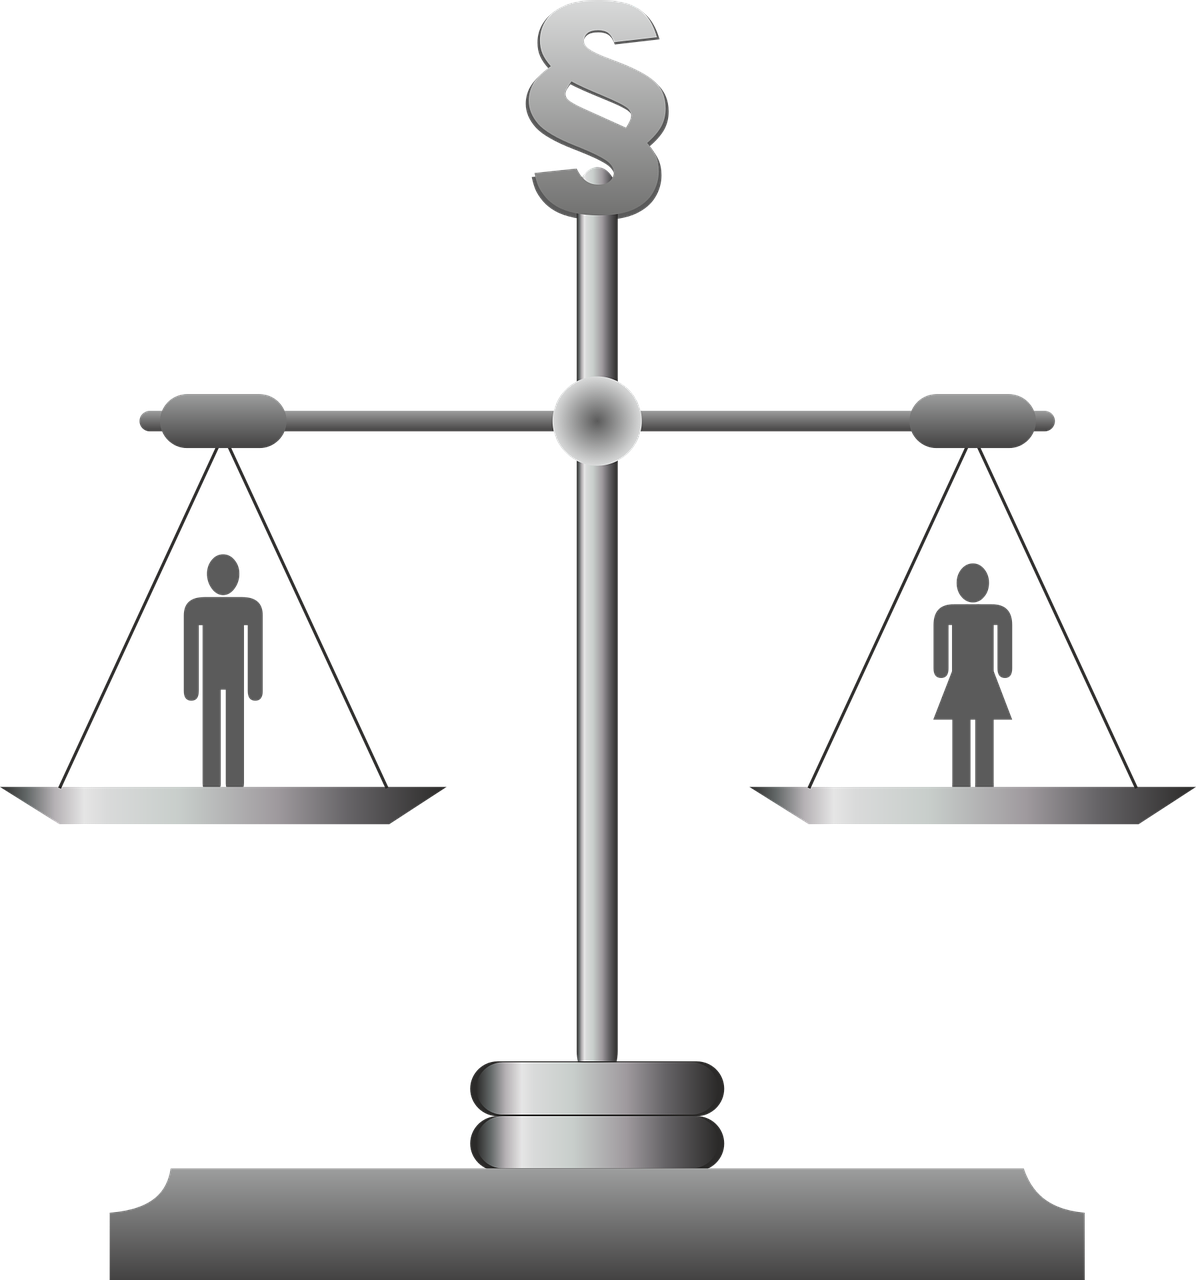 https://pixabay.com/en/horizontal-justice-right-law-1452535/